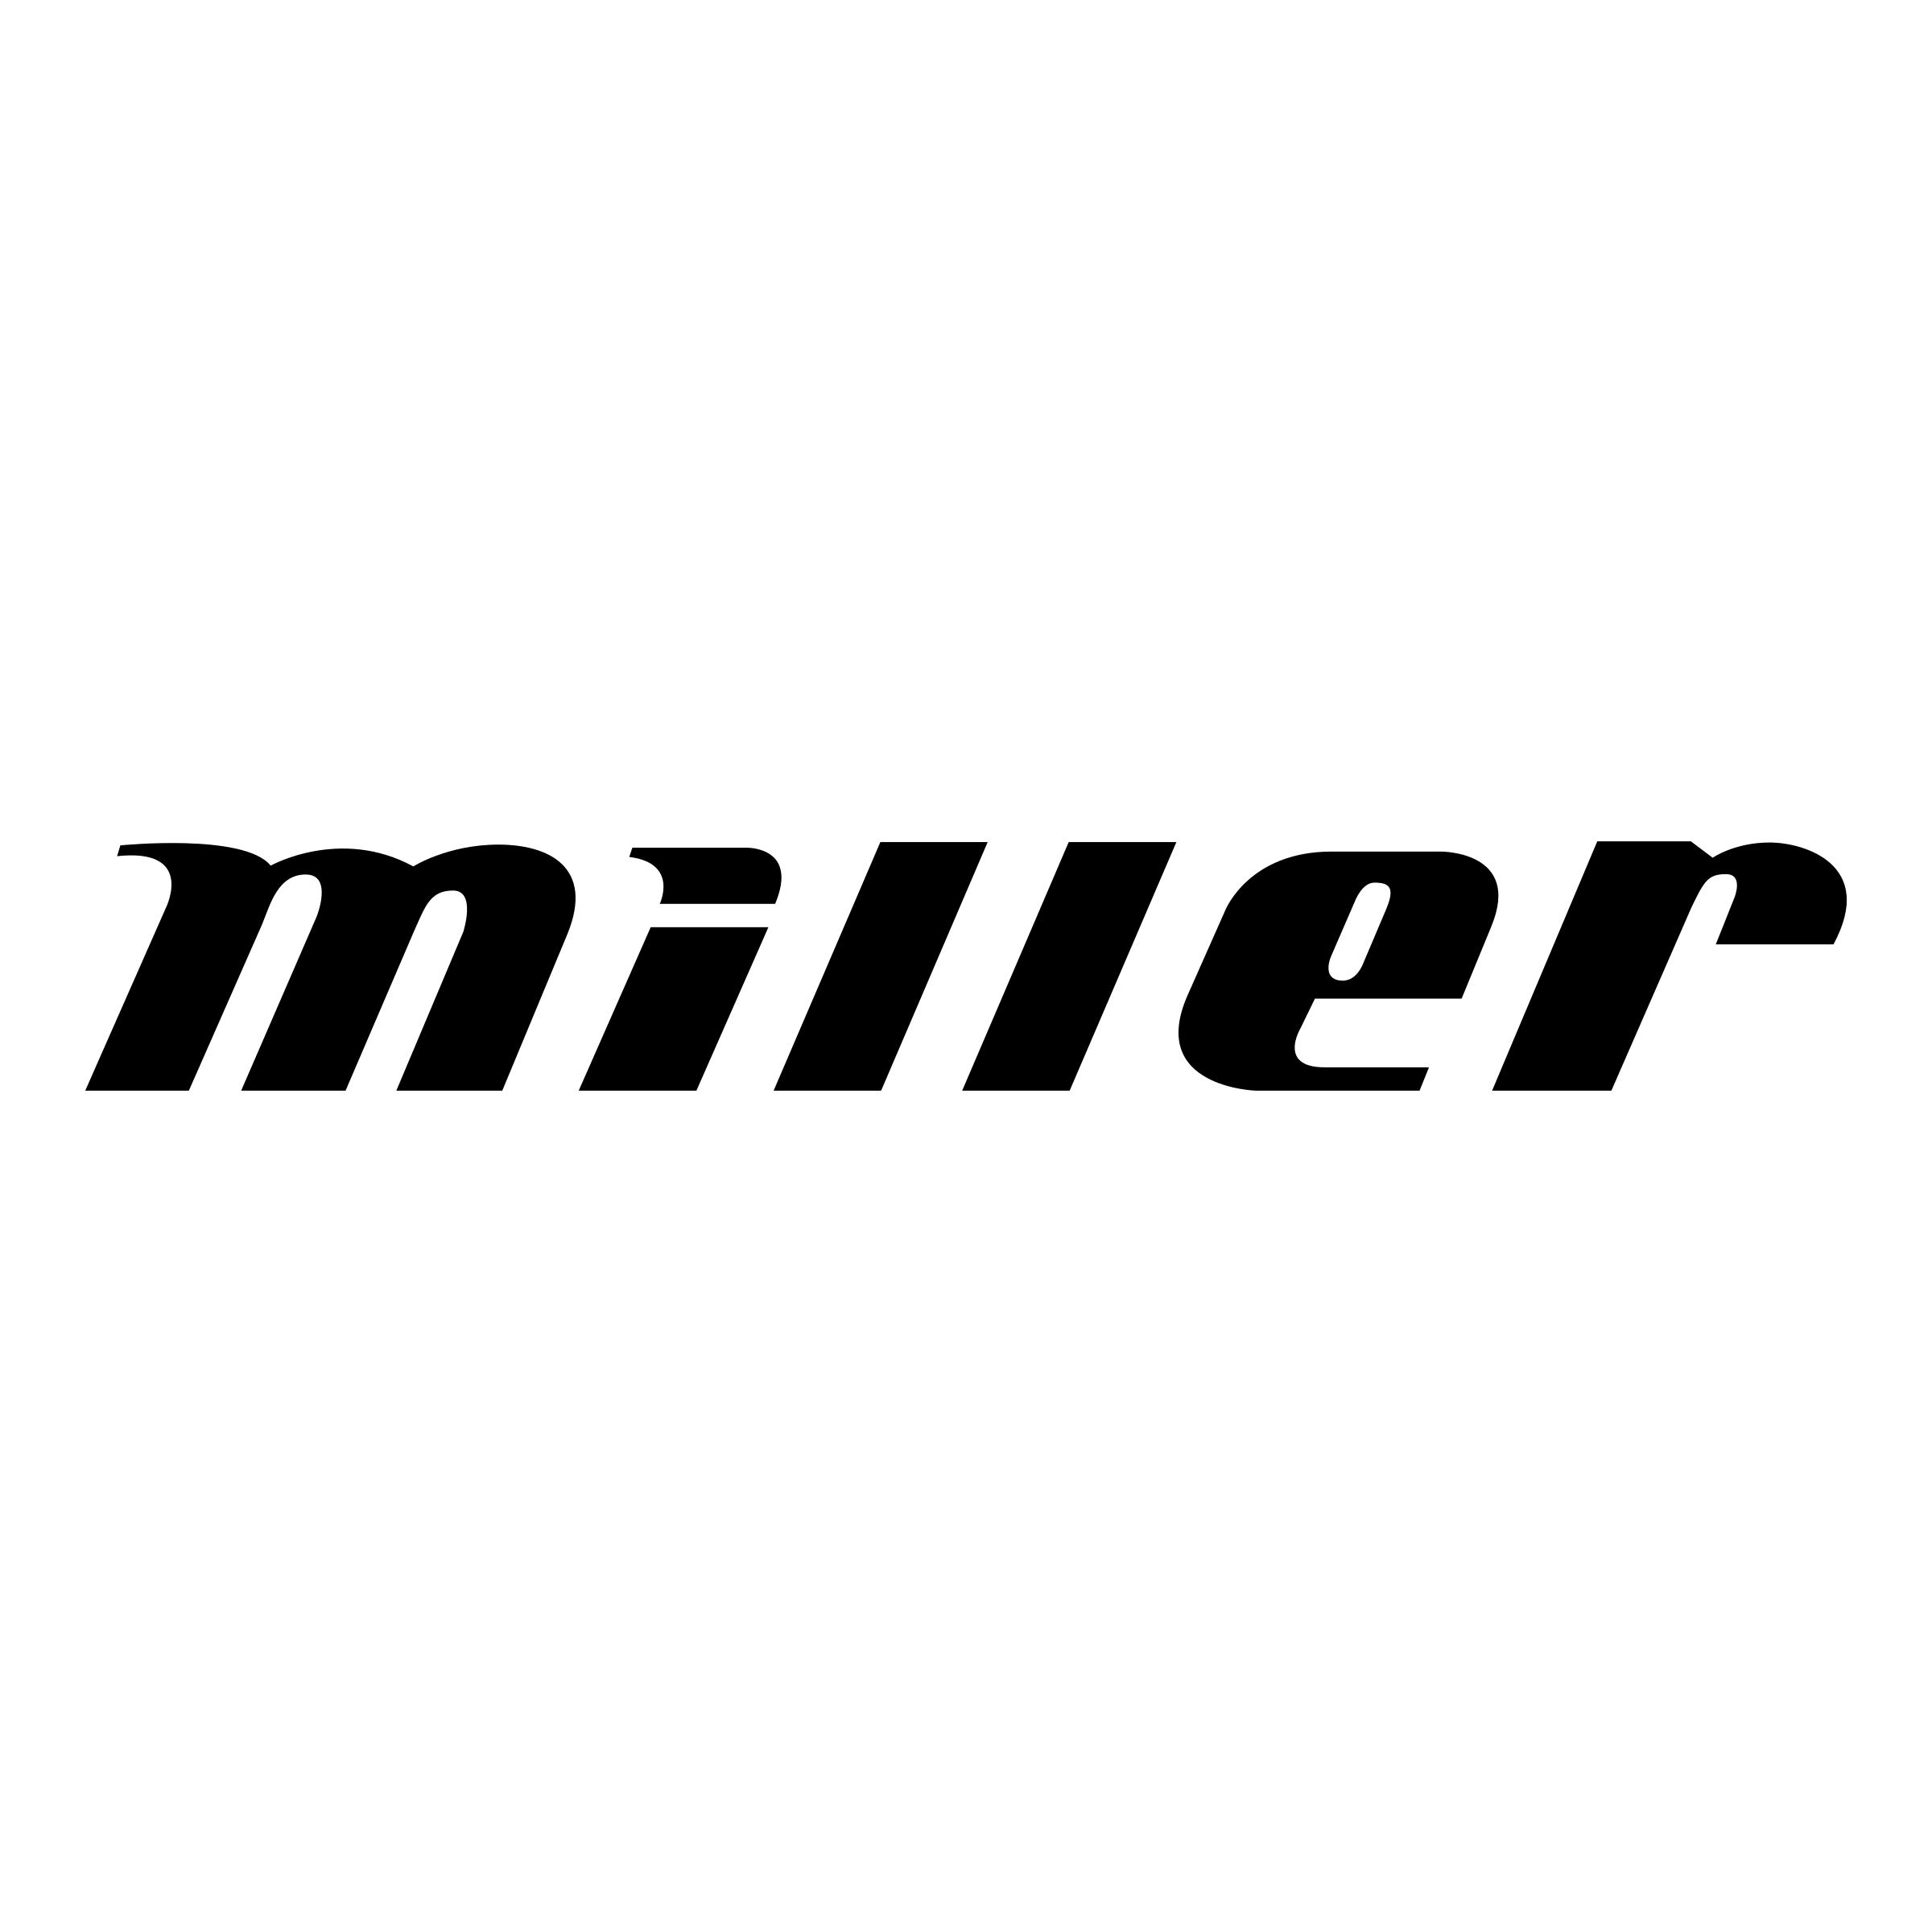 Miller надпись. Миллер лого. Аватарка Miller. Логотип вектор. Миллеры текст